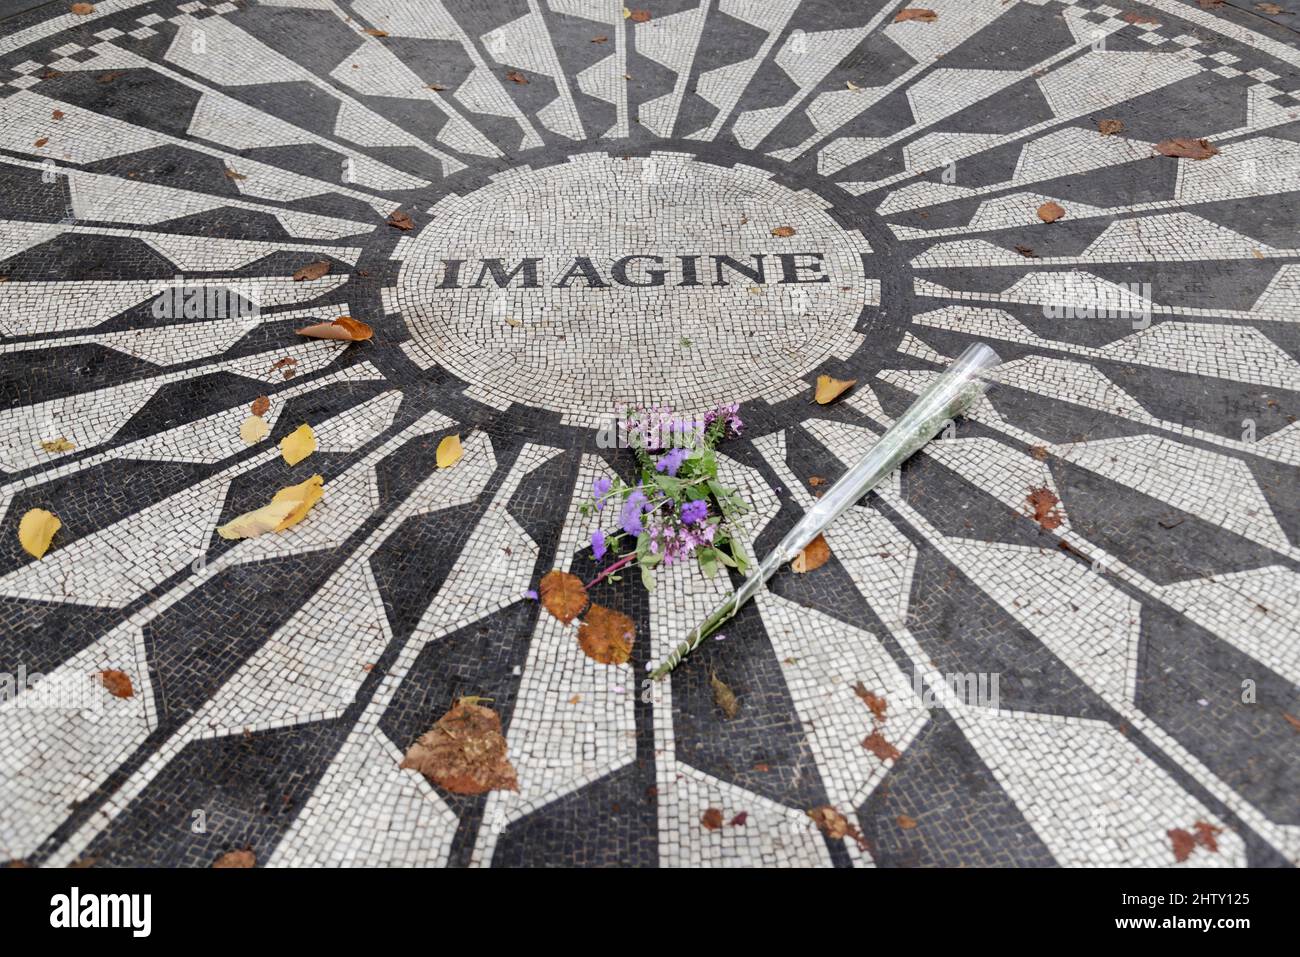 Strawberry Fields Memorial, mosaic in memory of John Lennon, Central Park, Manhattan, New York City, USA Stock Photo